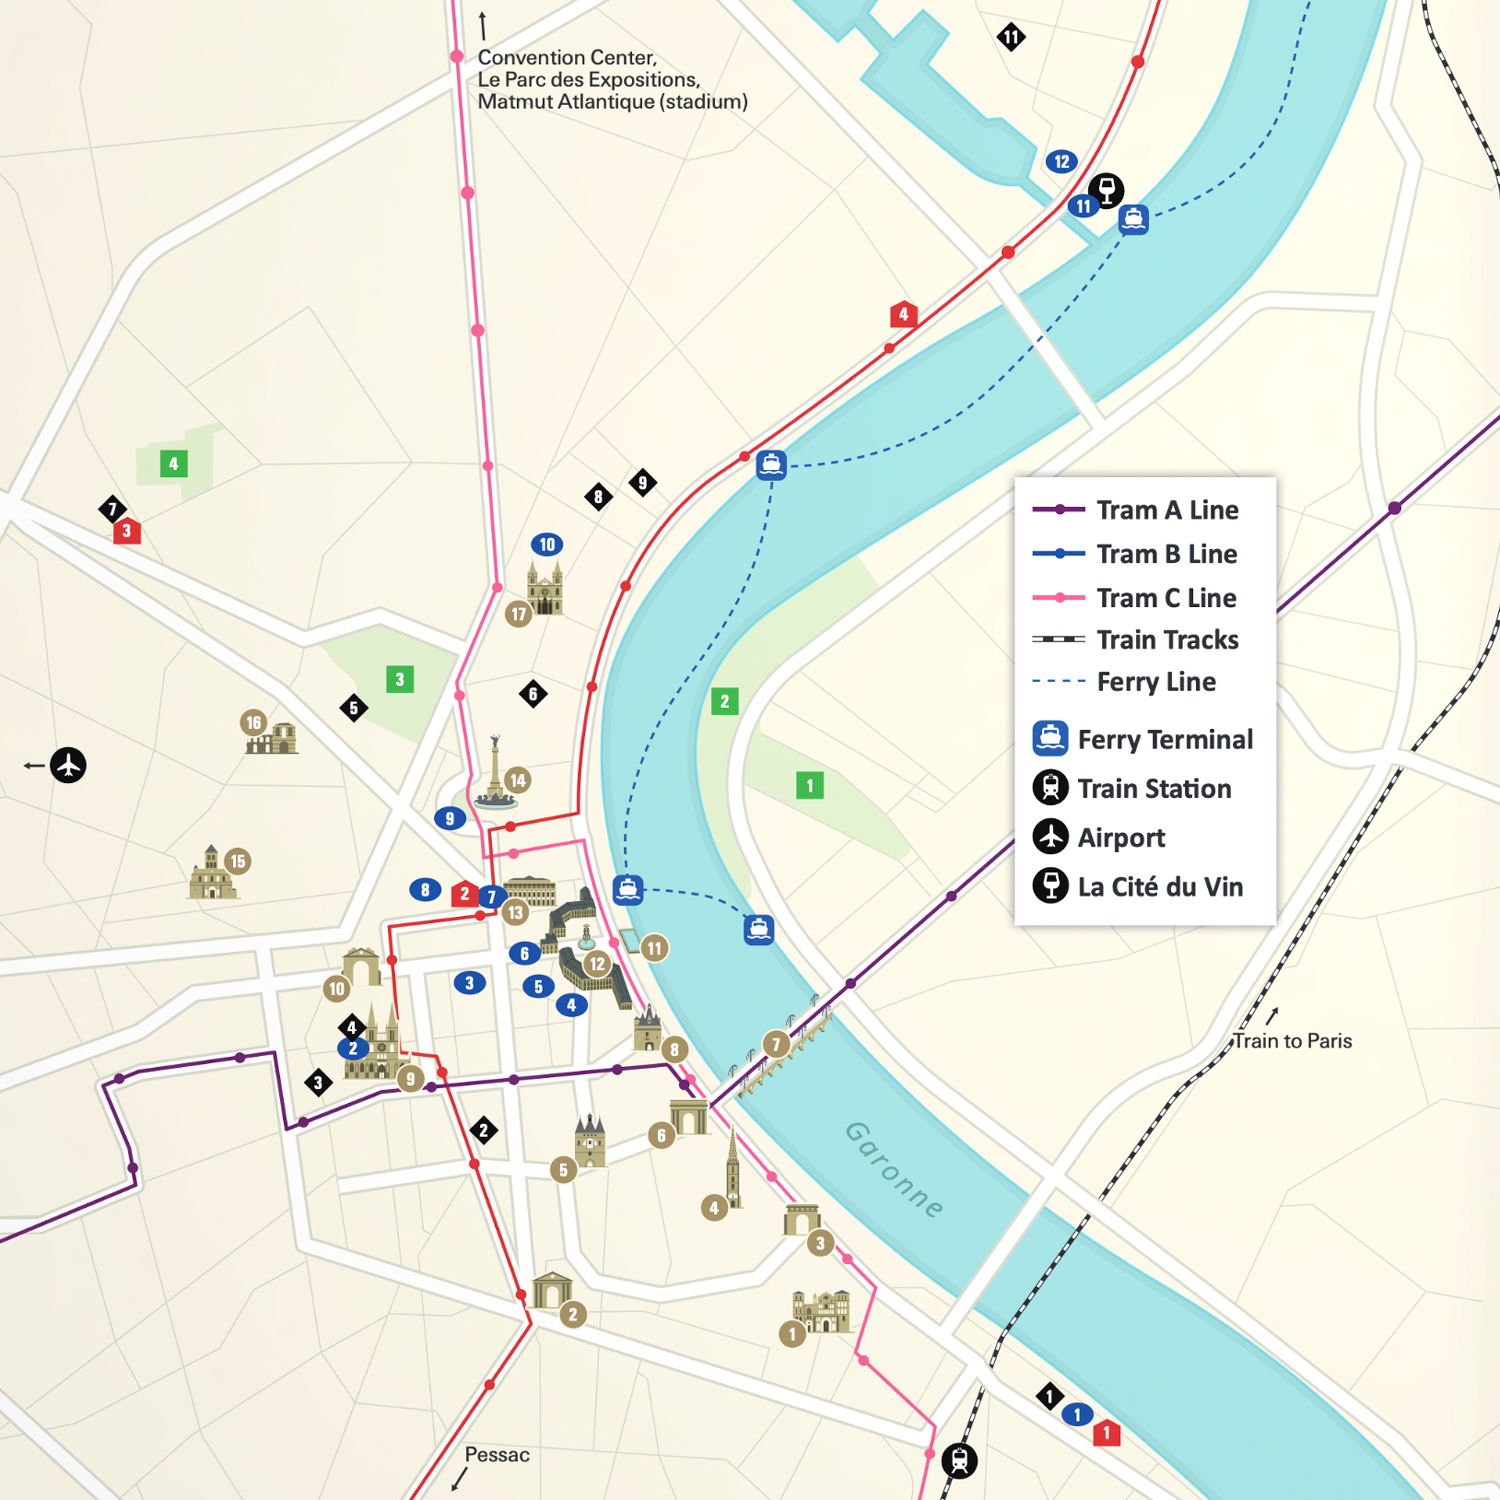 Bordeaux illustrated map - Le Cartographiste - Greg Franco